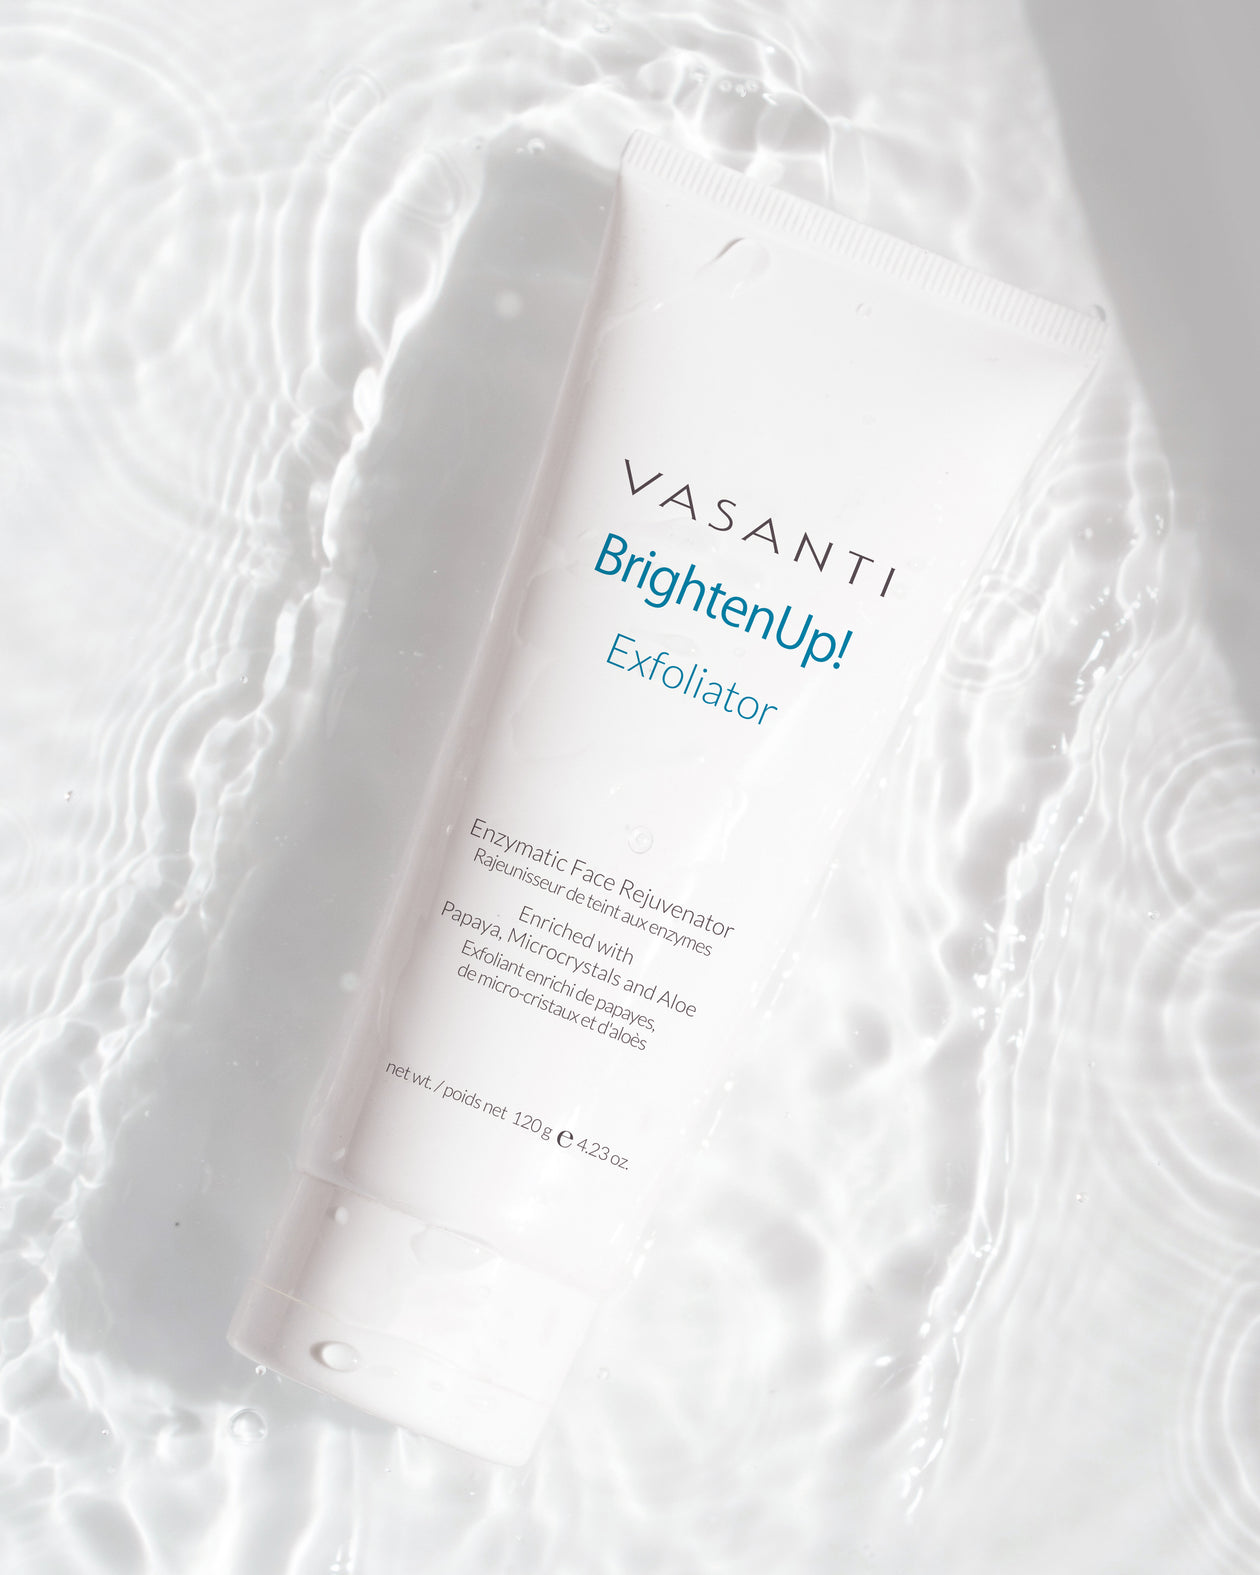 VASANTI Enzymatic Face Rejuvenator Exfoliating Face Wash by VASANTI - Enriched with Papaya, Microcrystals, Aloe Vera - Get Healthy Glowing Skin - Original Size (120g)